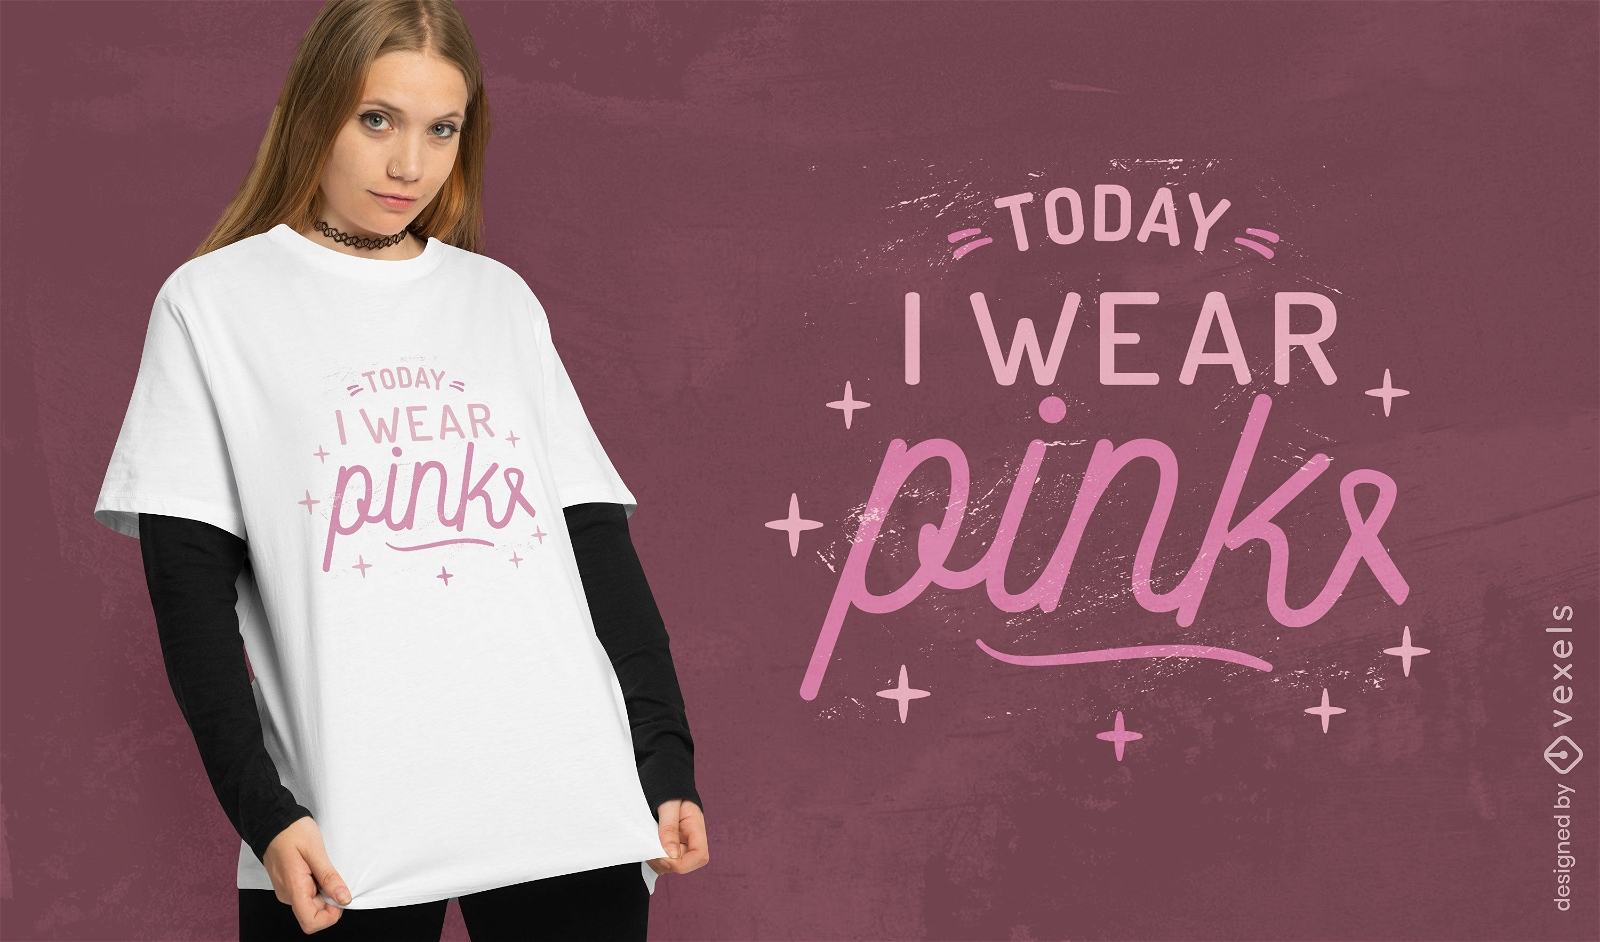 Diseño de camiseta con cita de apoyo sobre cáncer de mama.